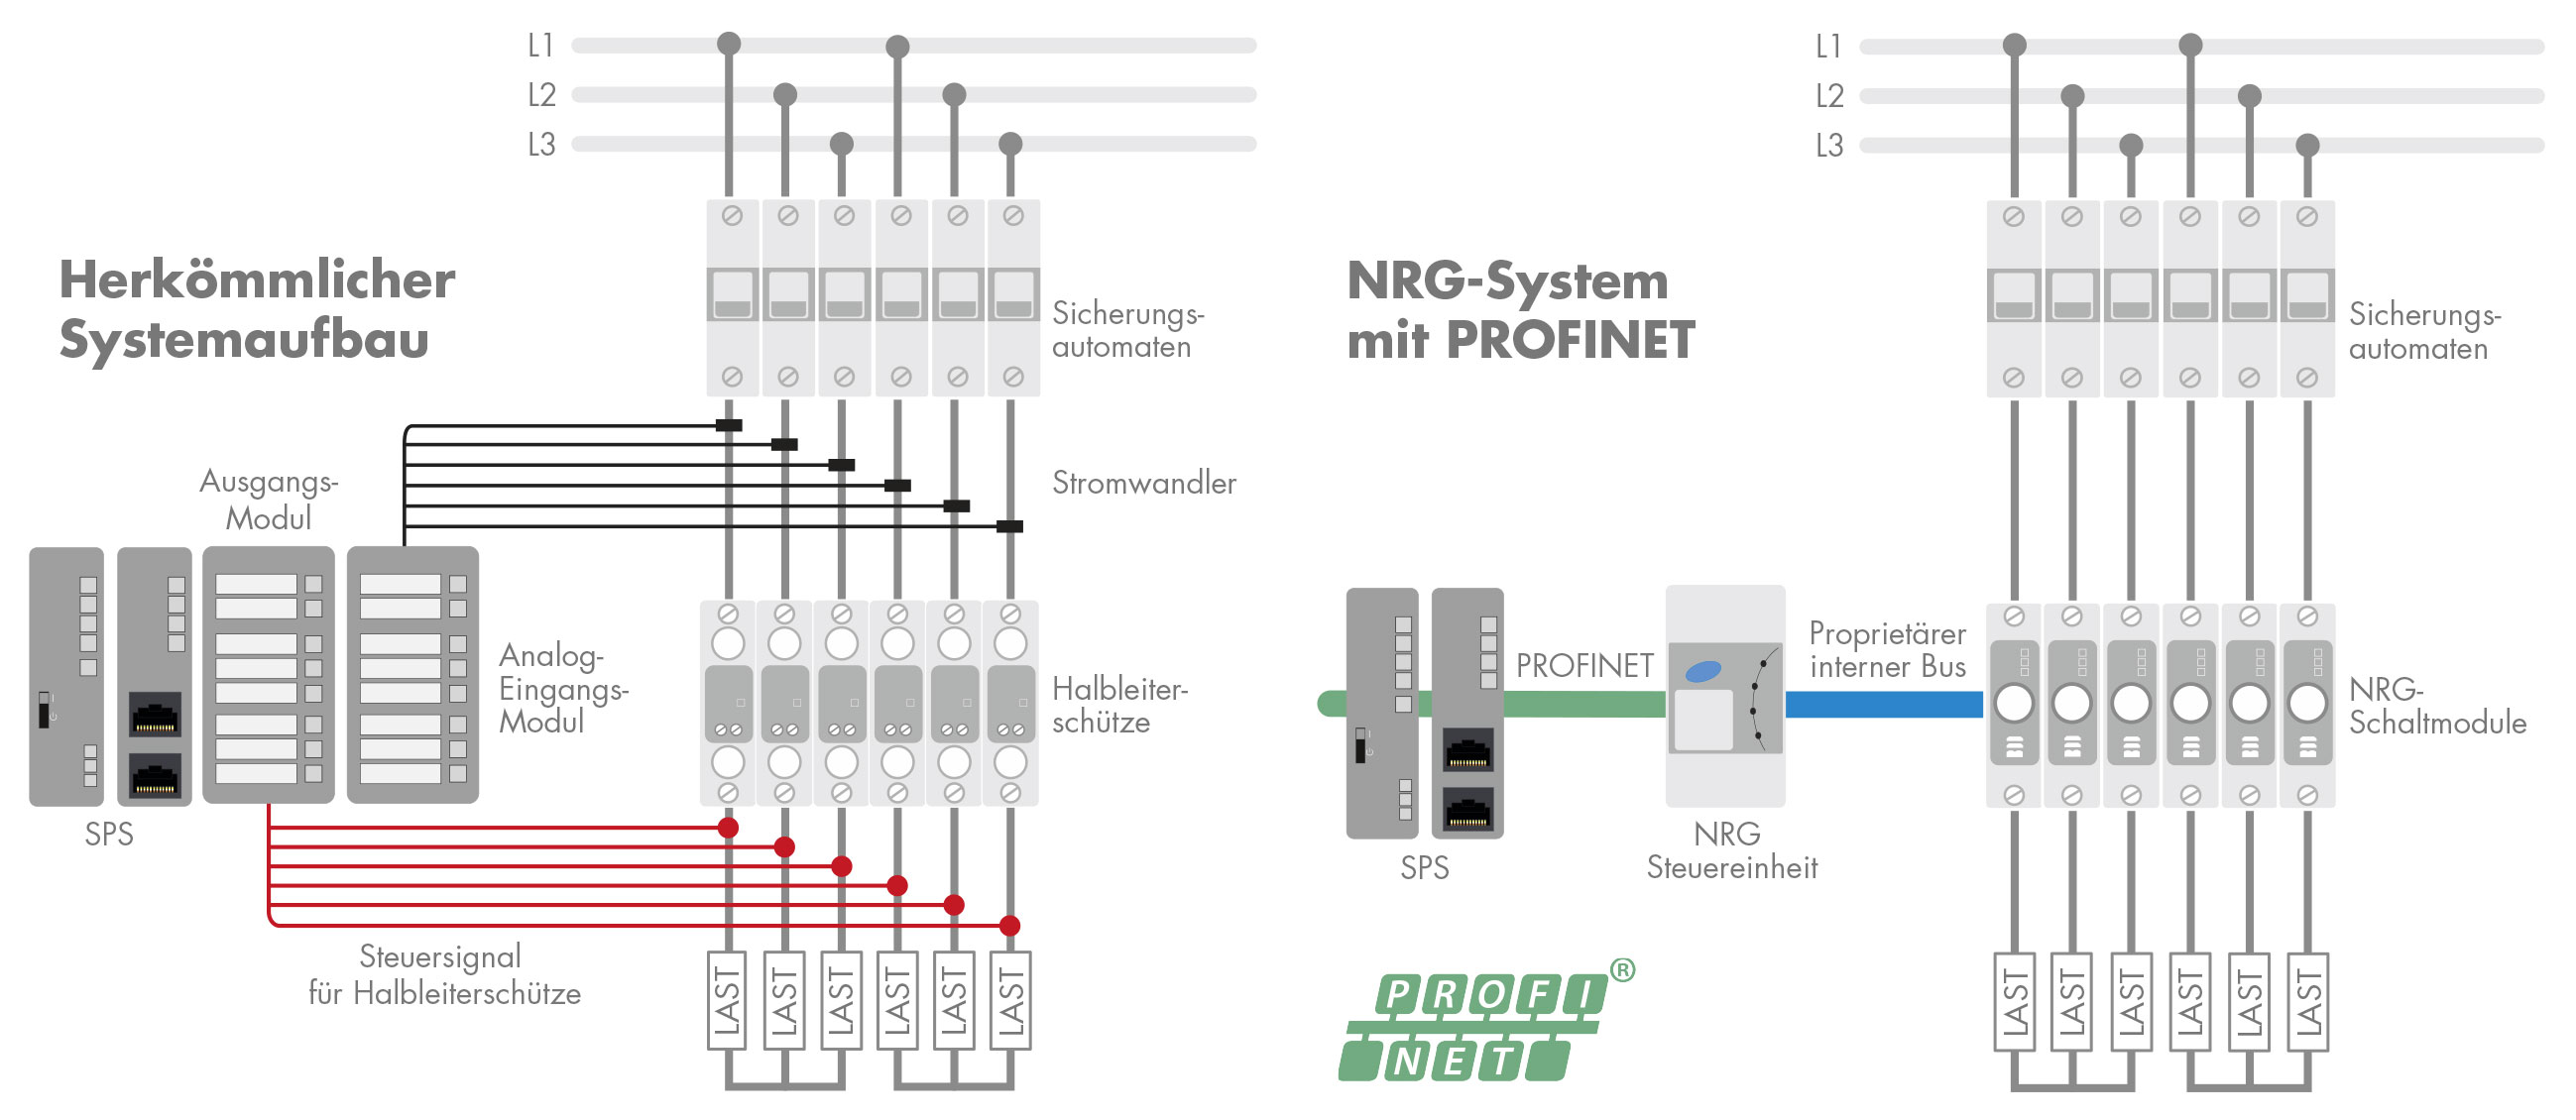 Press Image NRGC General system setup NRGC NRG system setup GER RGB